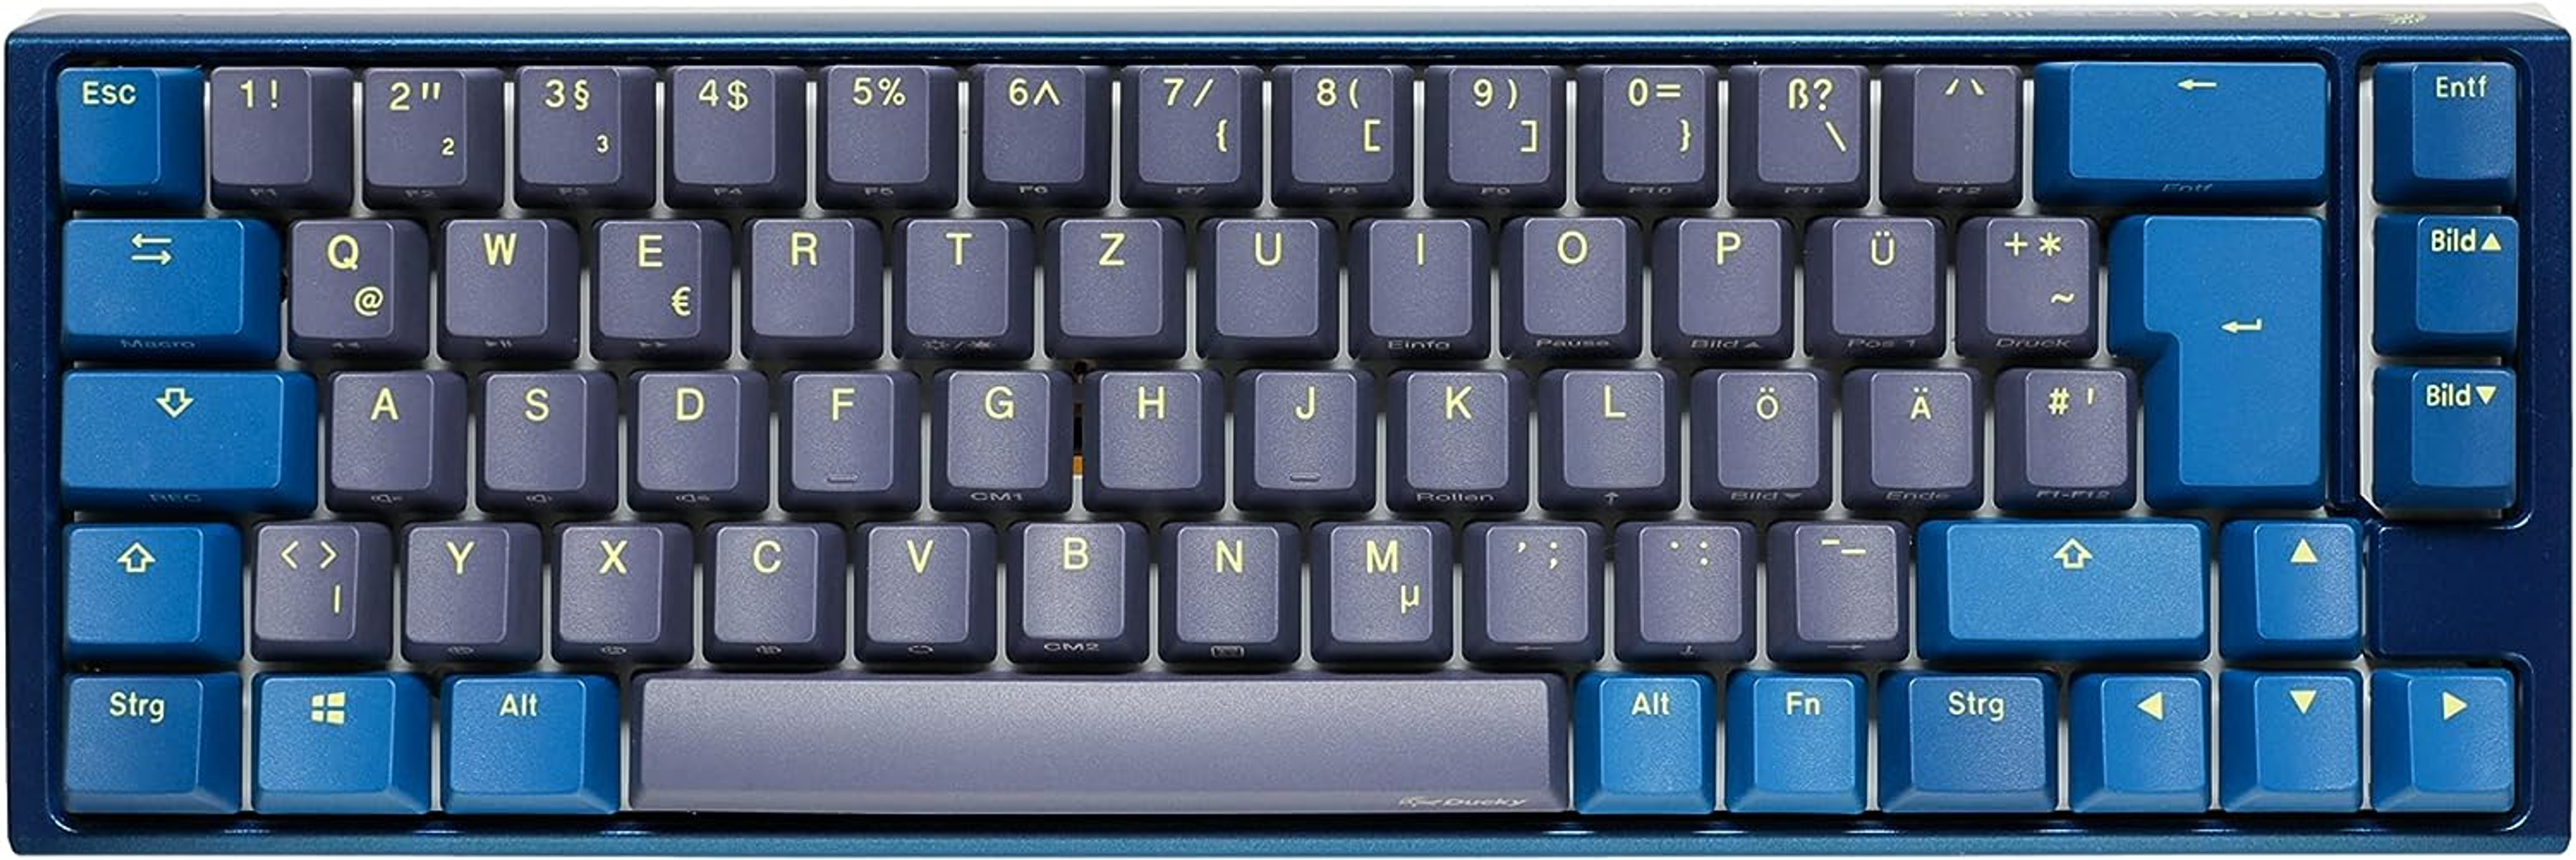 DKON2167ST-CDEPDDBBHHC1, DUCKY Tastatur